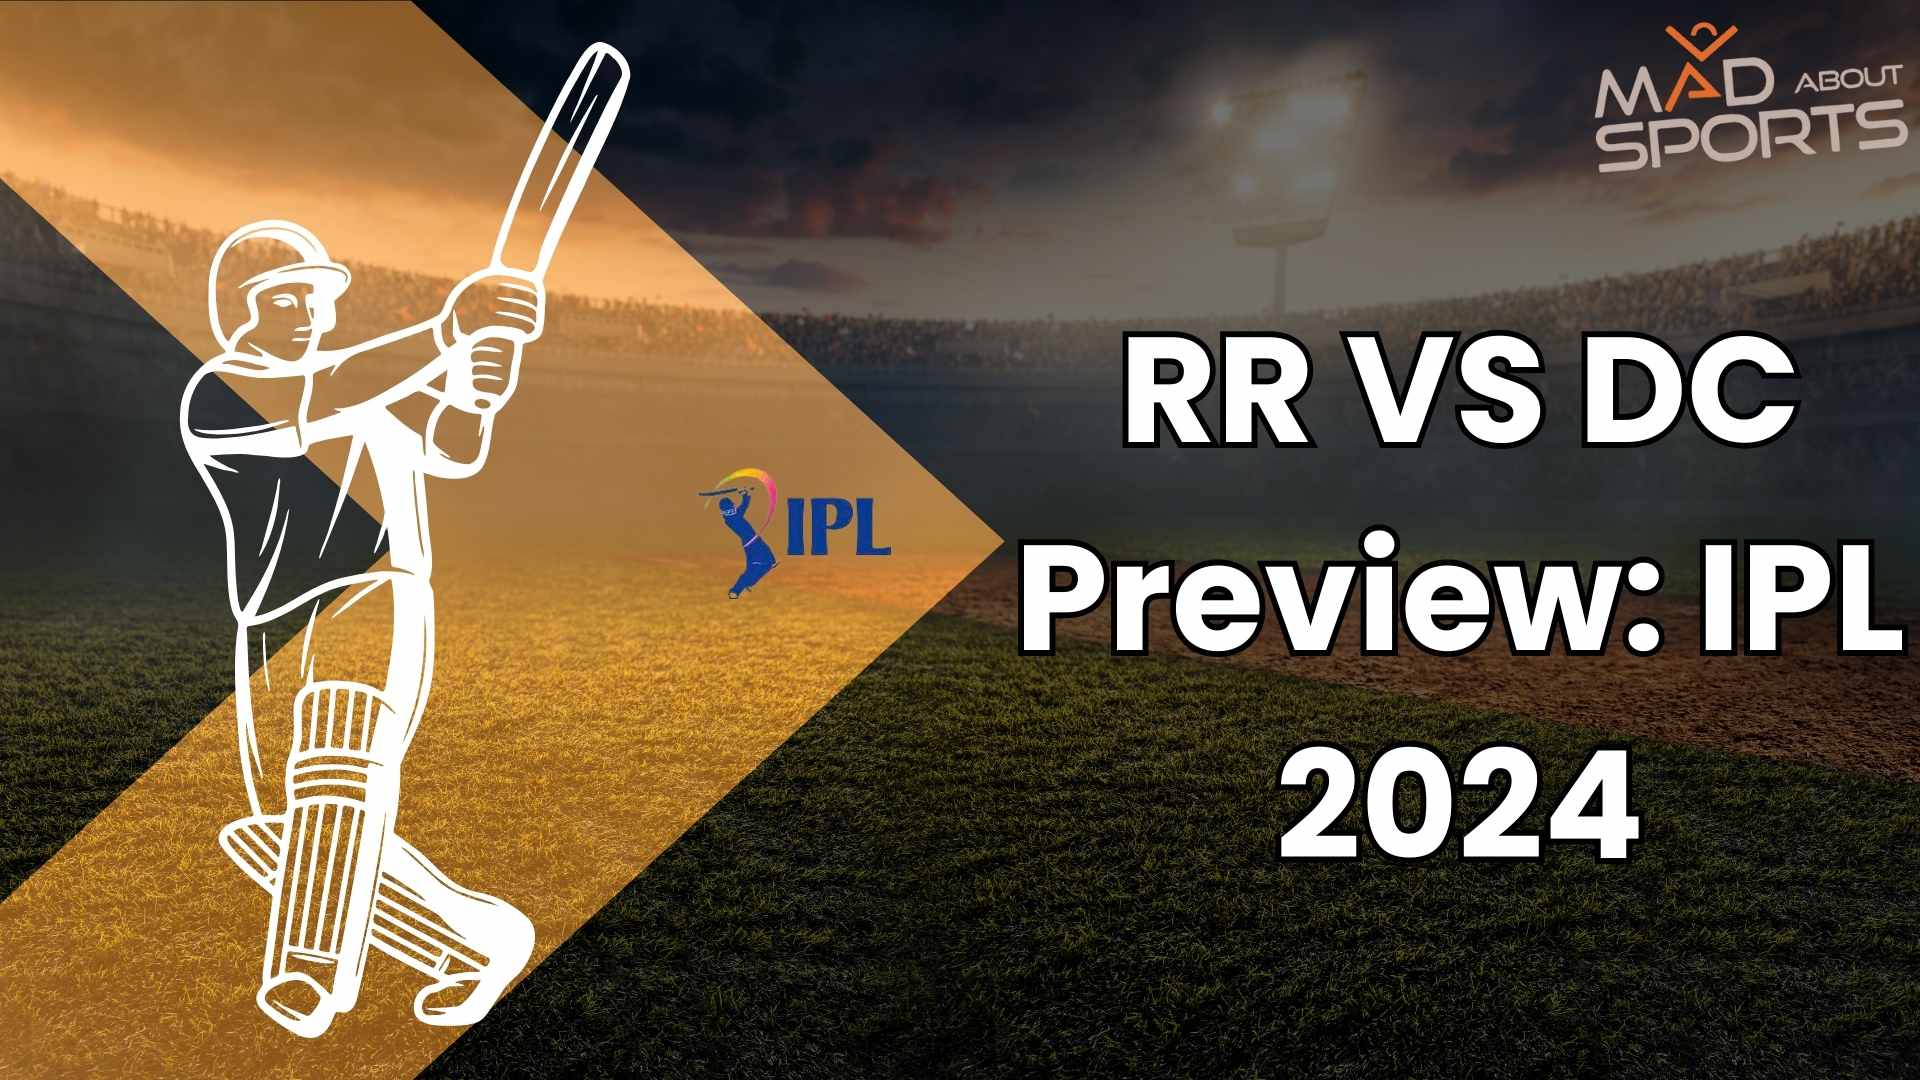 RR VS DC Preview: IPL 2024